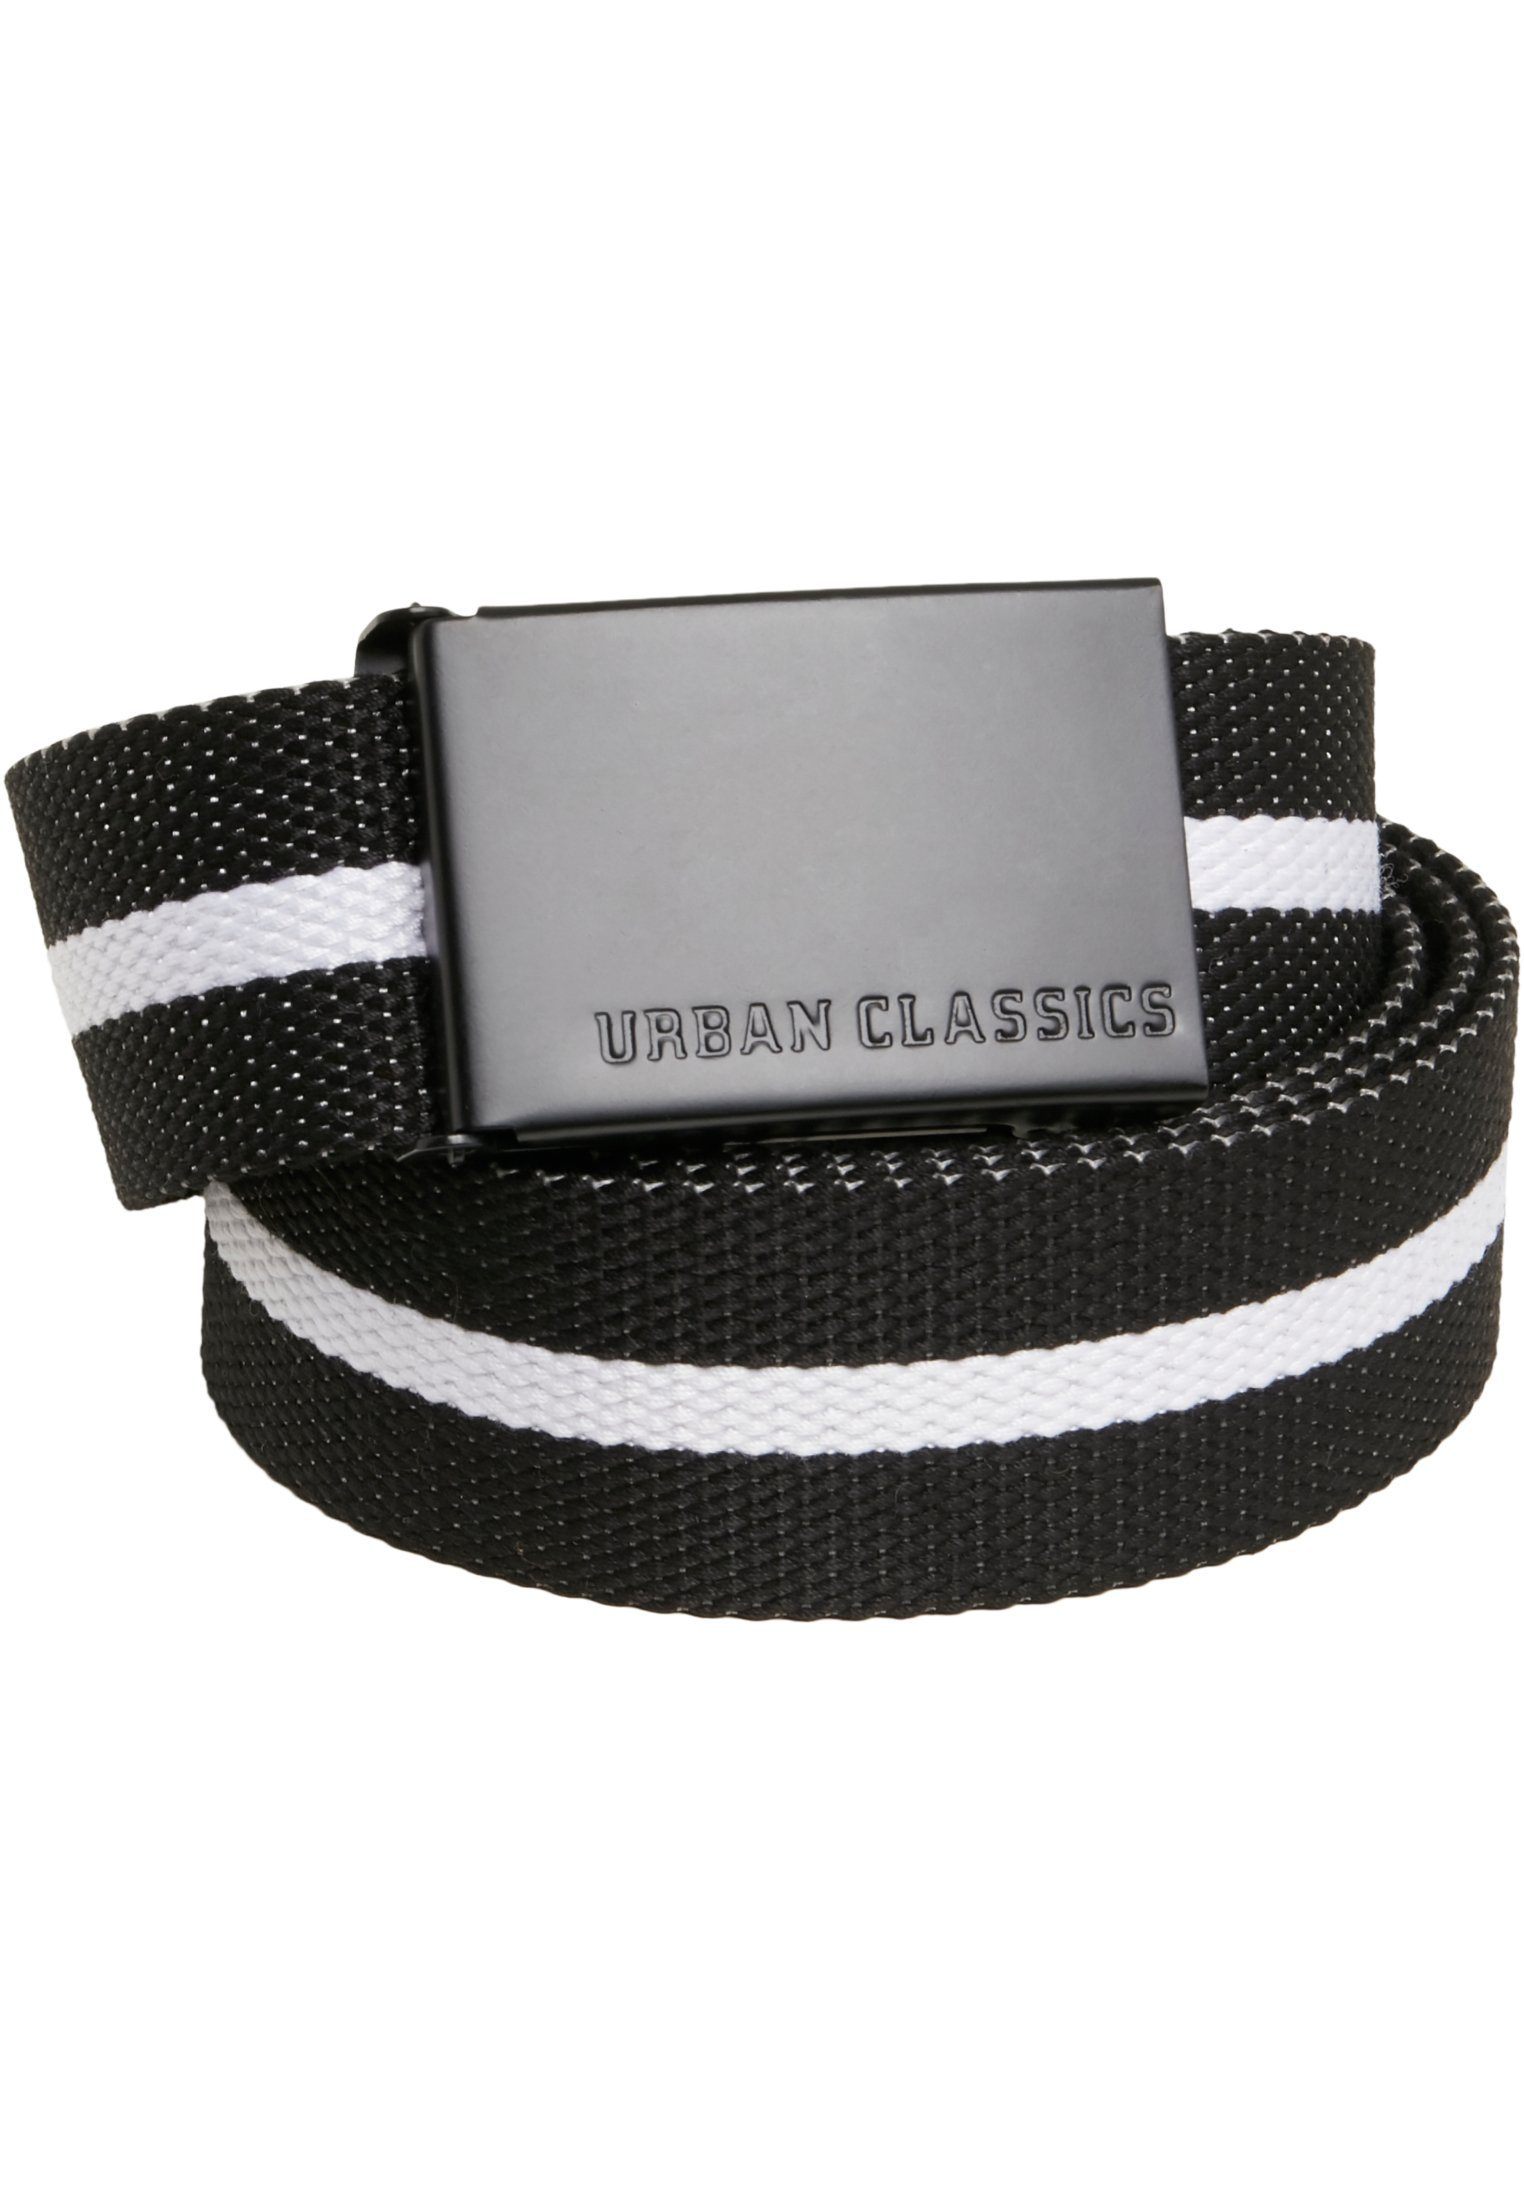 Beliebte Neuware URBAN CLASSICS Canvas black white Accessoires stripe-black Belts Hüftgürtel